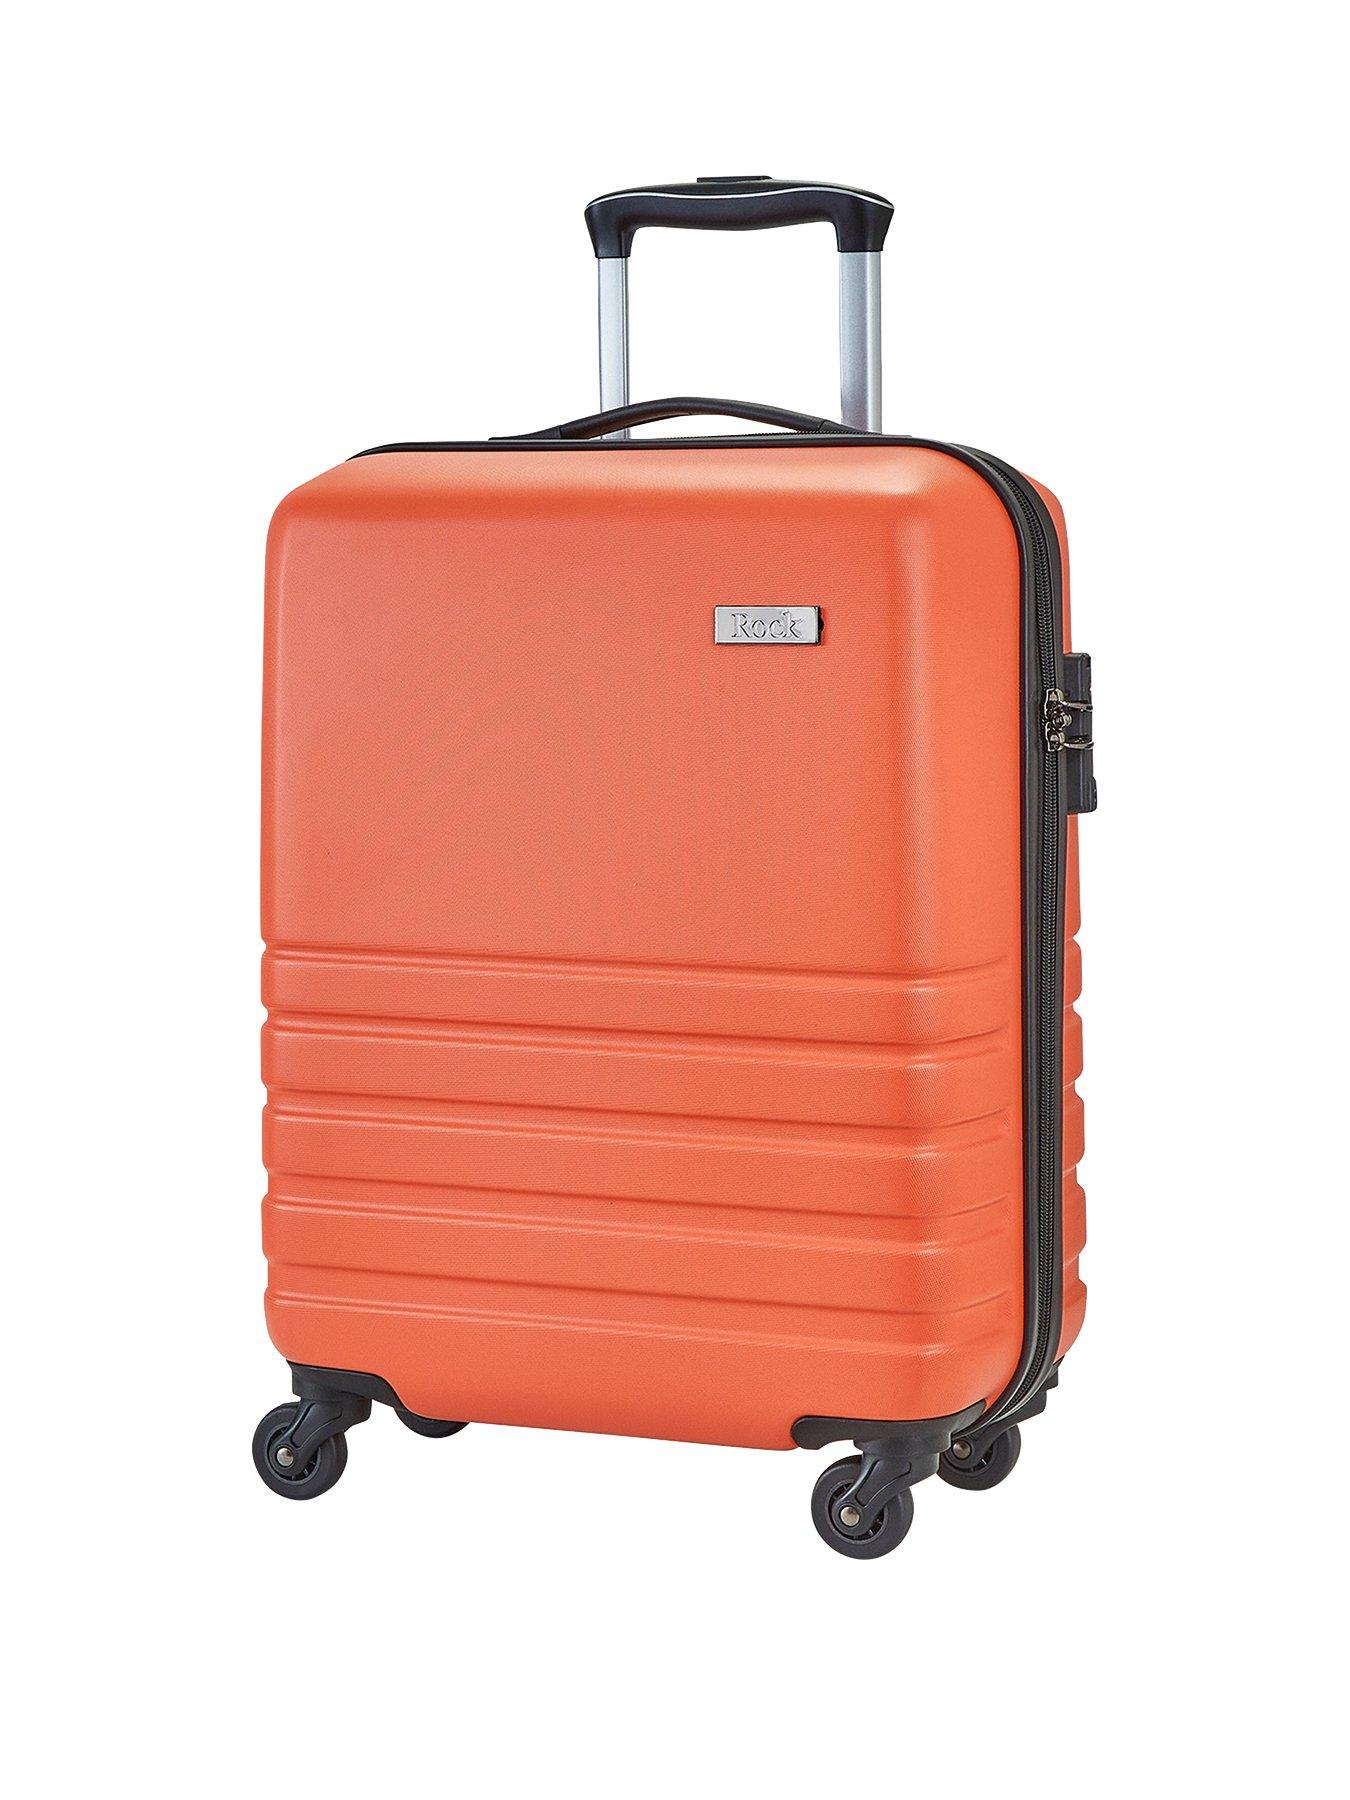 WestWood Suitcase Cabin Hard Shell Travel Luggage Trolley Case Set  Lightweight